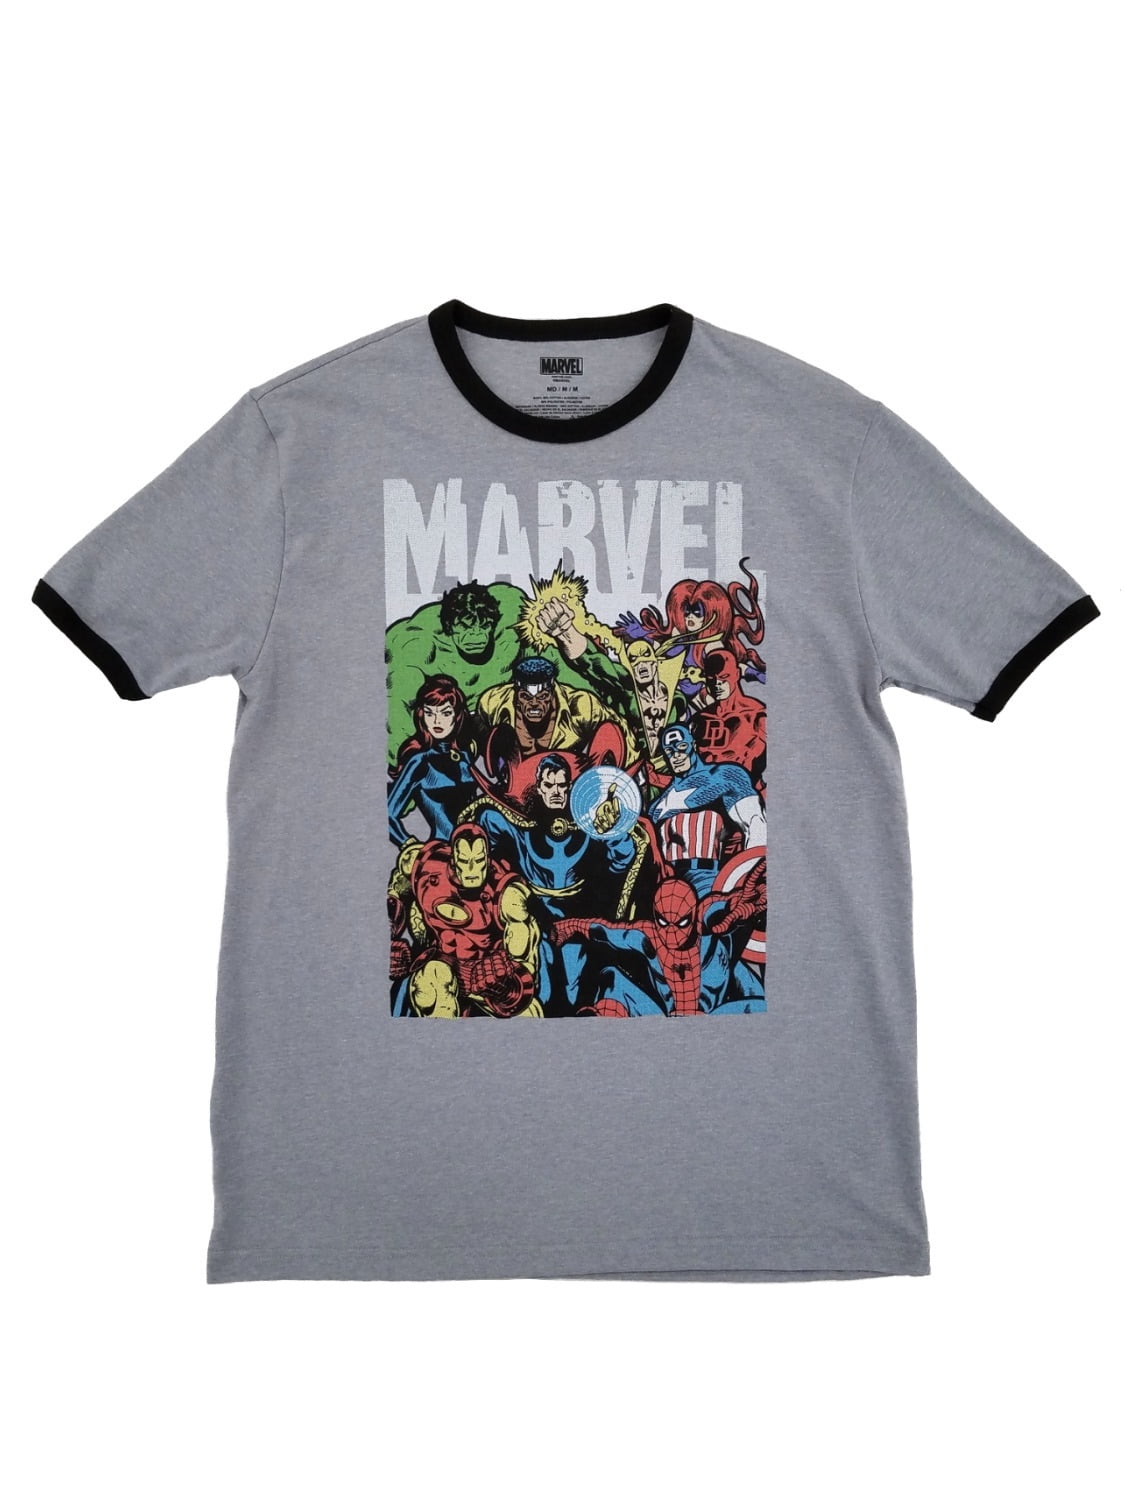 Disney Marvel Shirt Captain America Tee Avengers T Shirt An XT Superhero Shirt Marvel T Shirt Fury Shirt Disney Avenger Shirt